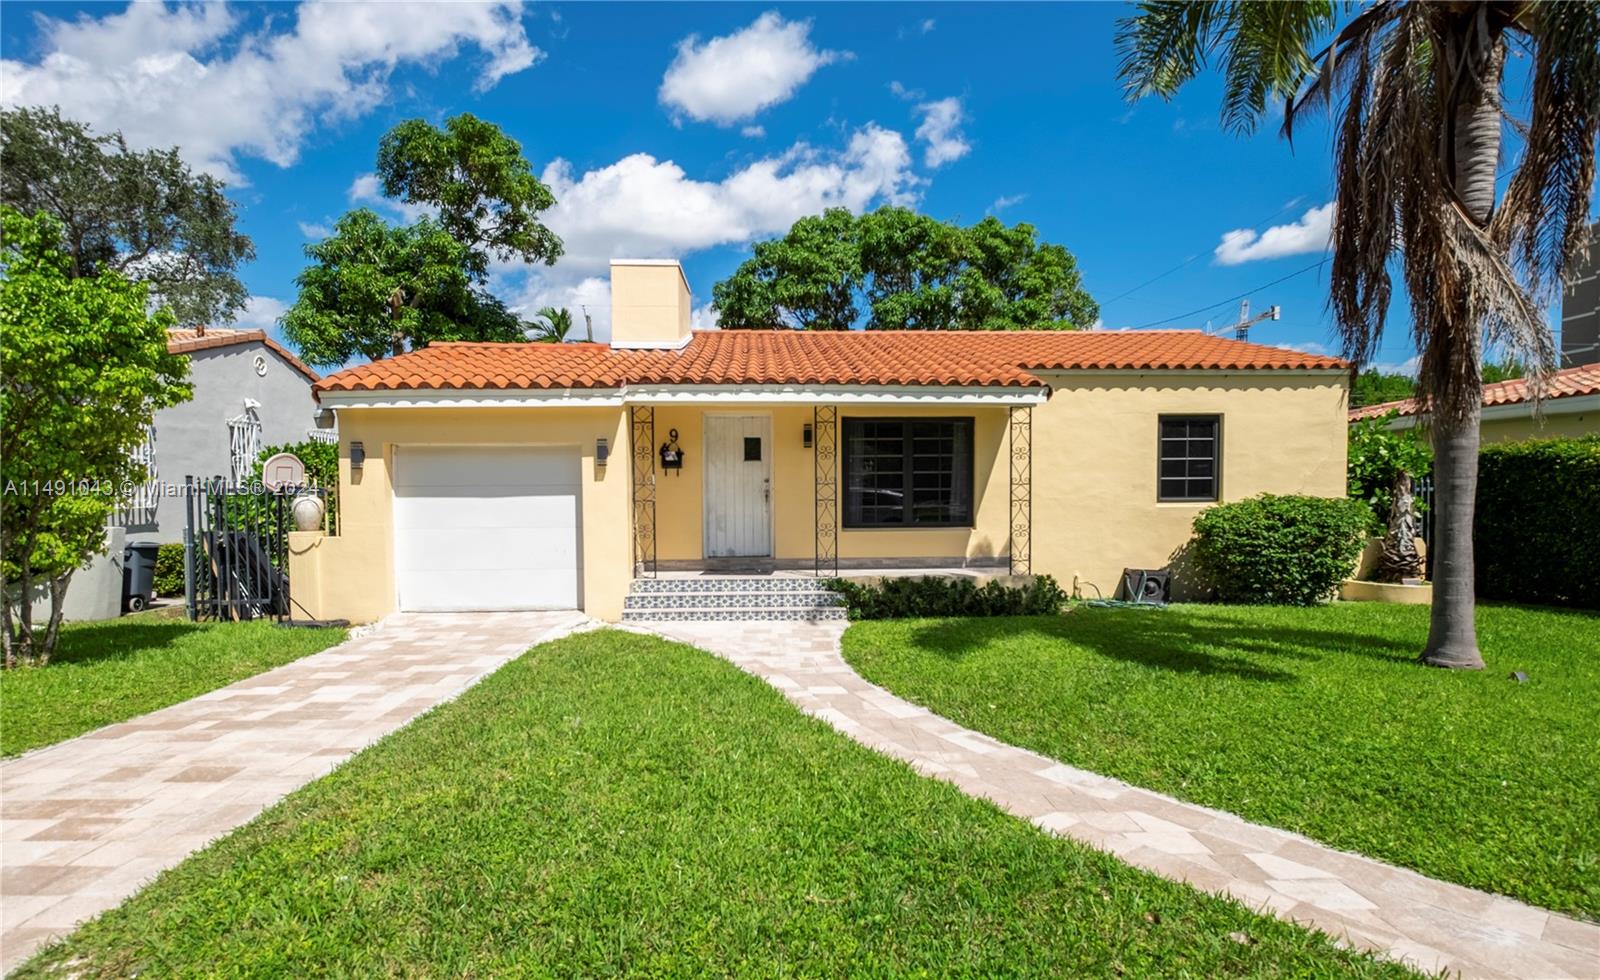 Property for Sale at 9 Campina Ct, Coral Gables, Broward County, Florida - Bedrooms: 3 
Bathrooms: 2  - $935,550